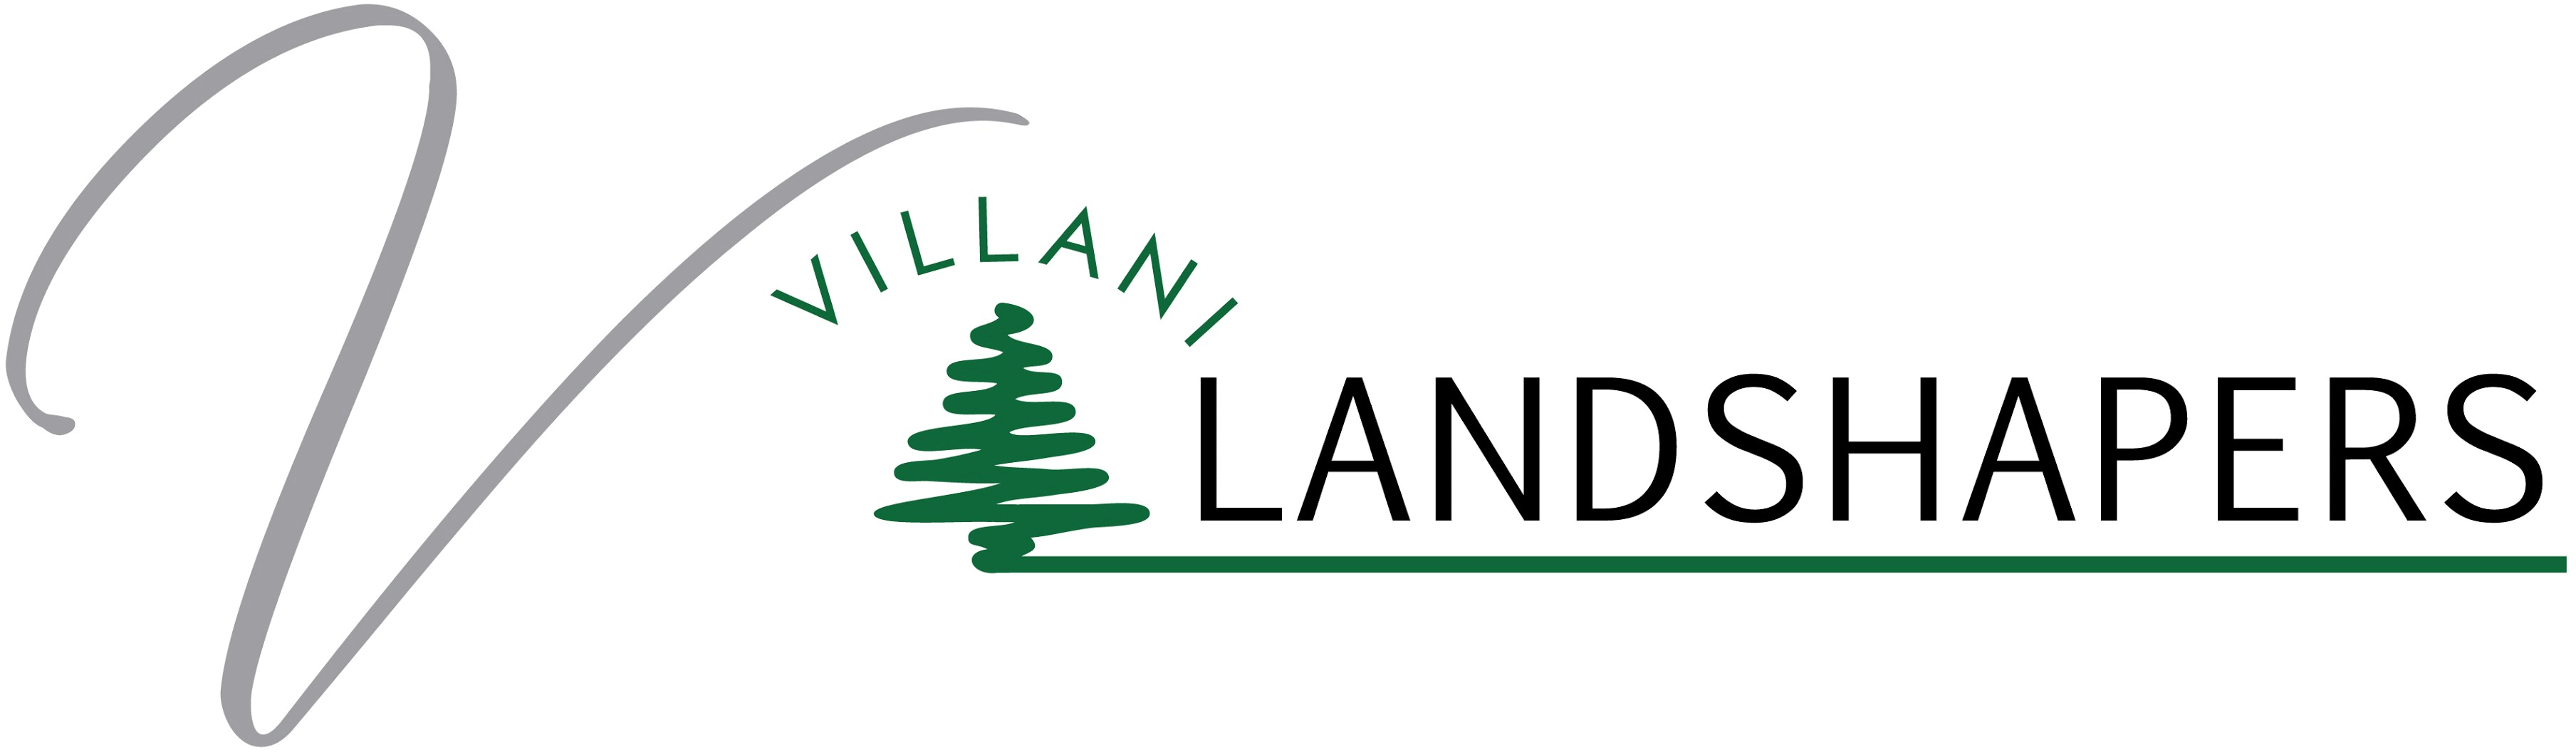 Villani Landshapers logo